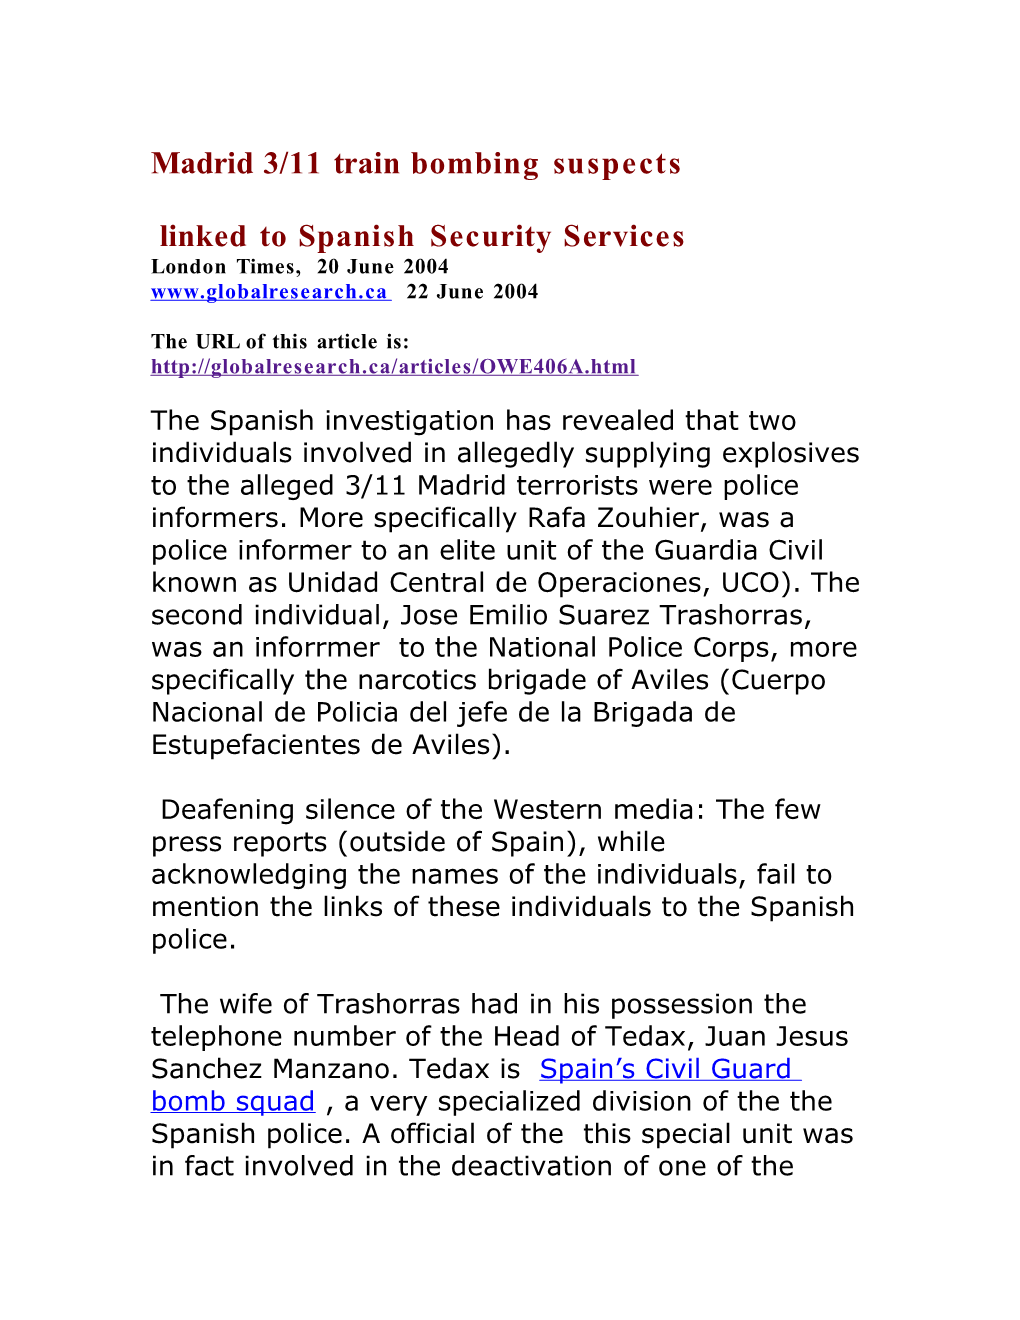 Madrid 3/11 Train Bombing Suspects